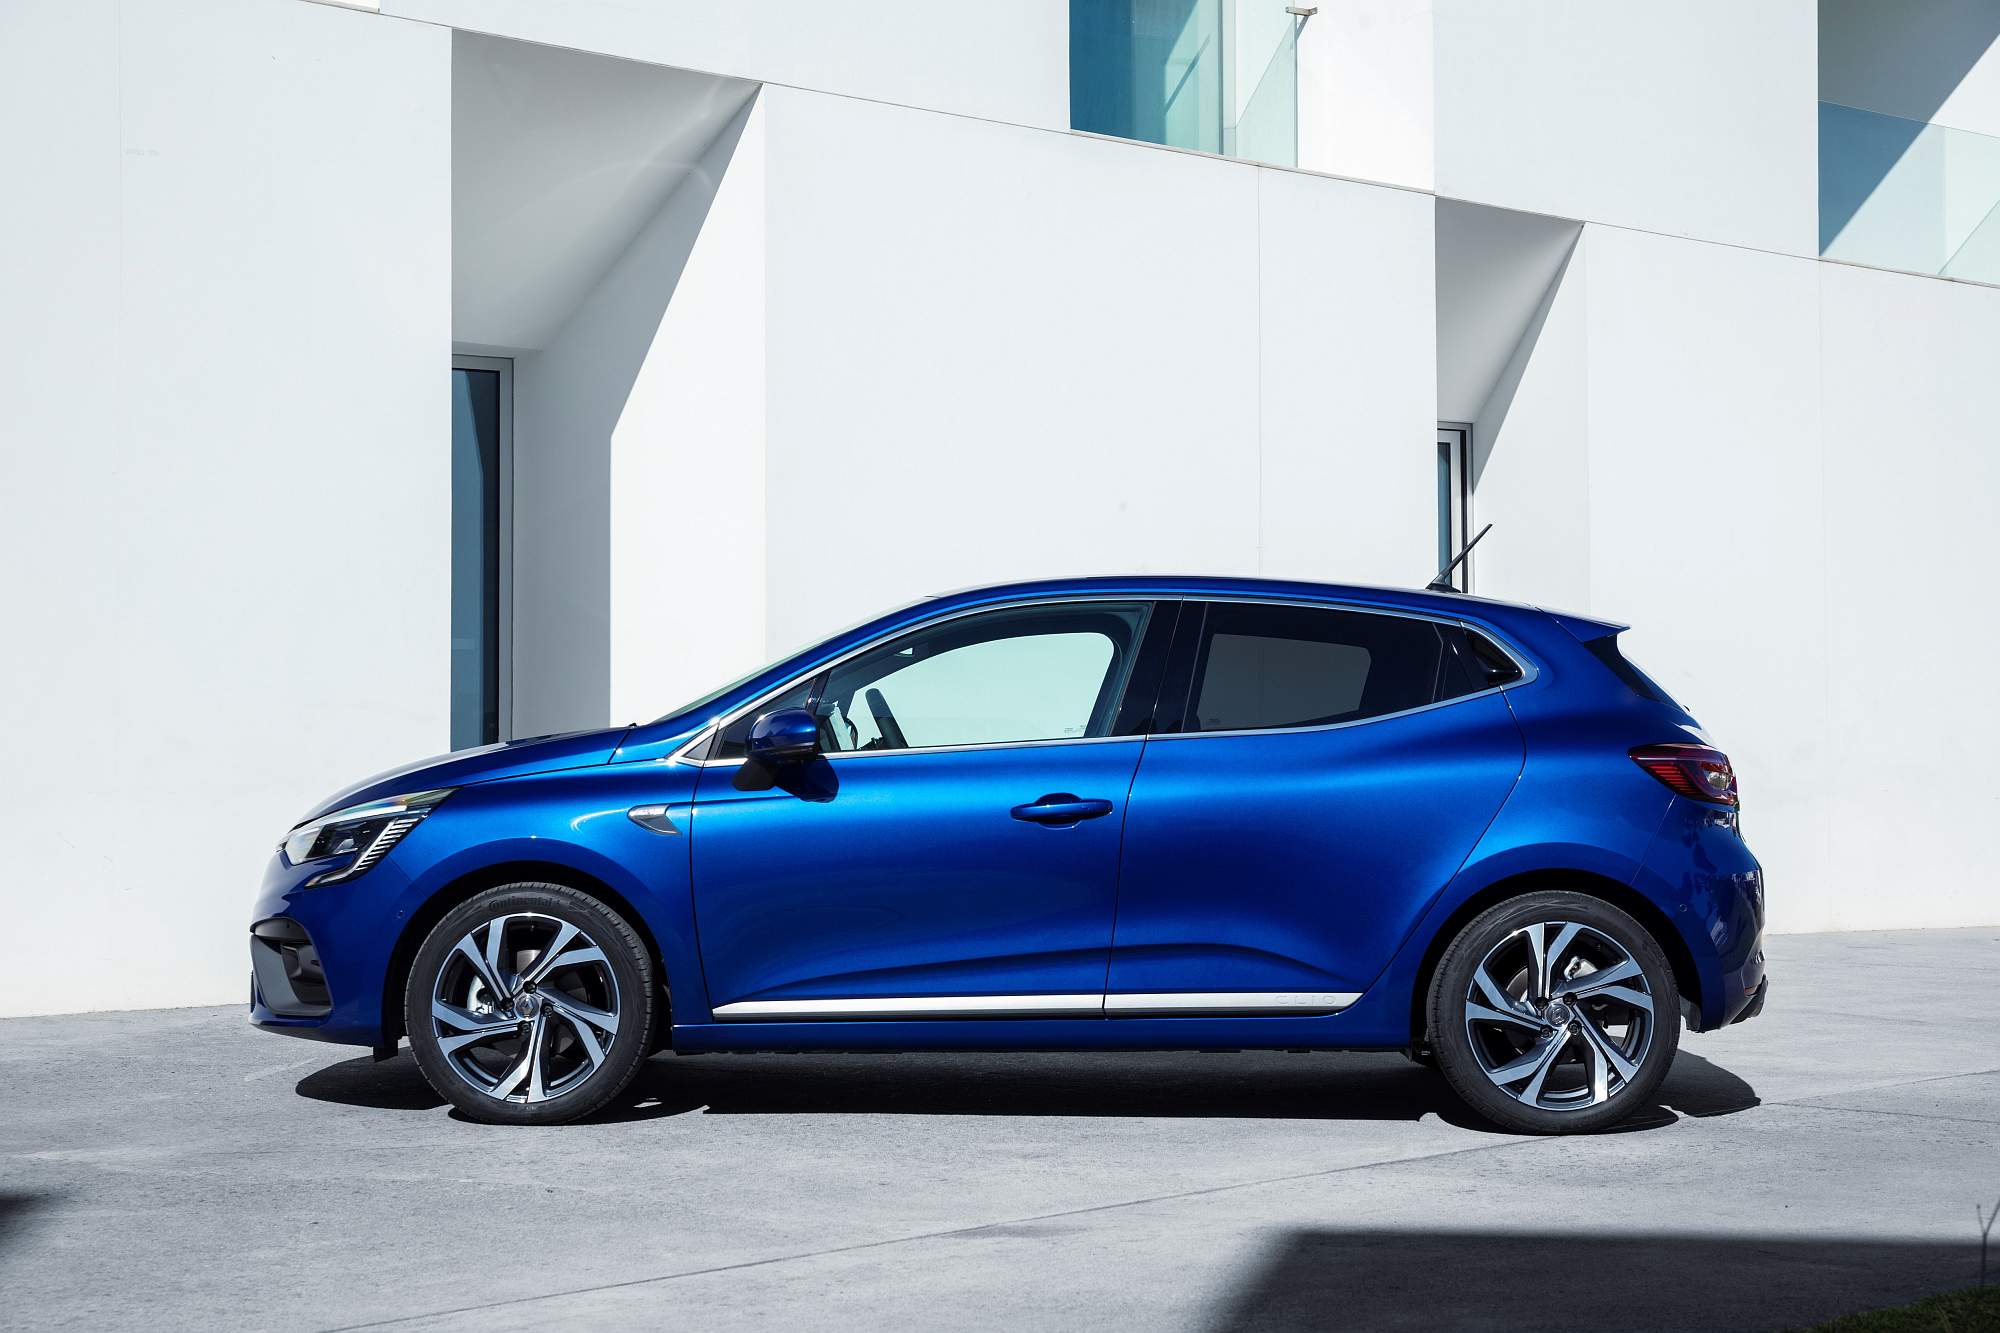 2019 – Essai presse Nouvelle Renault CLIO au Portugal